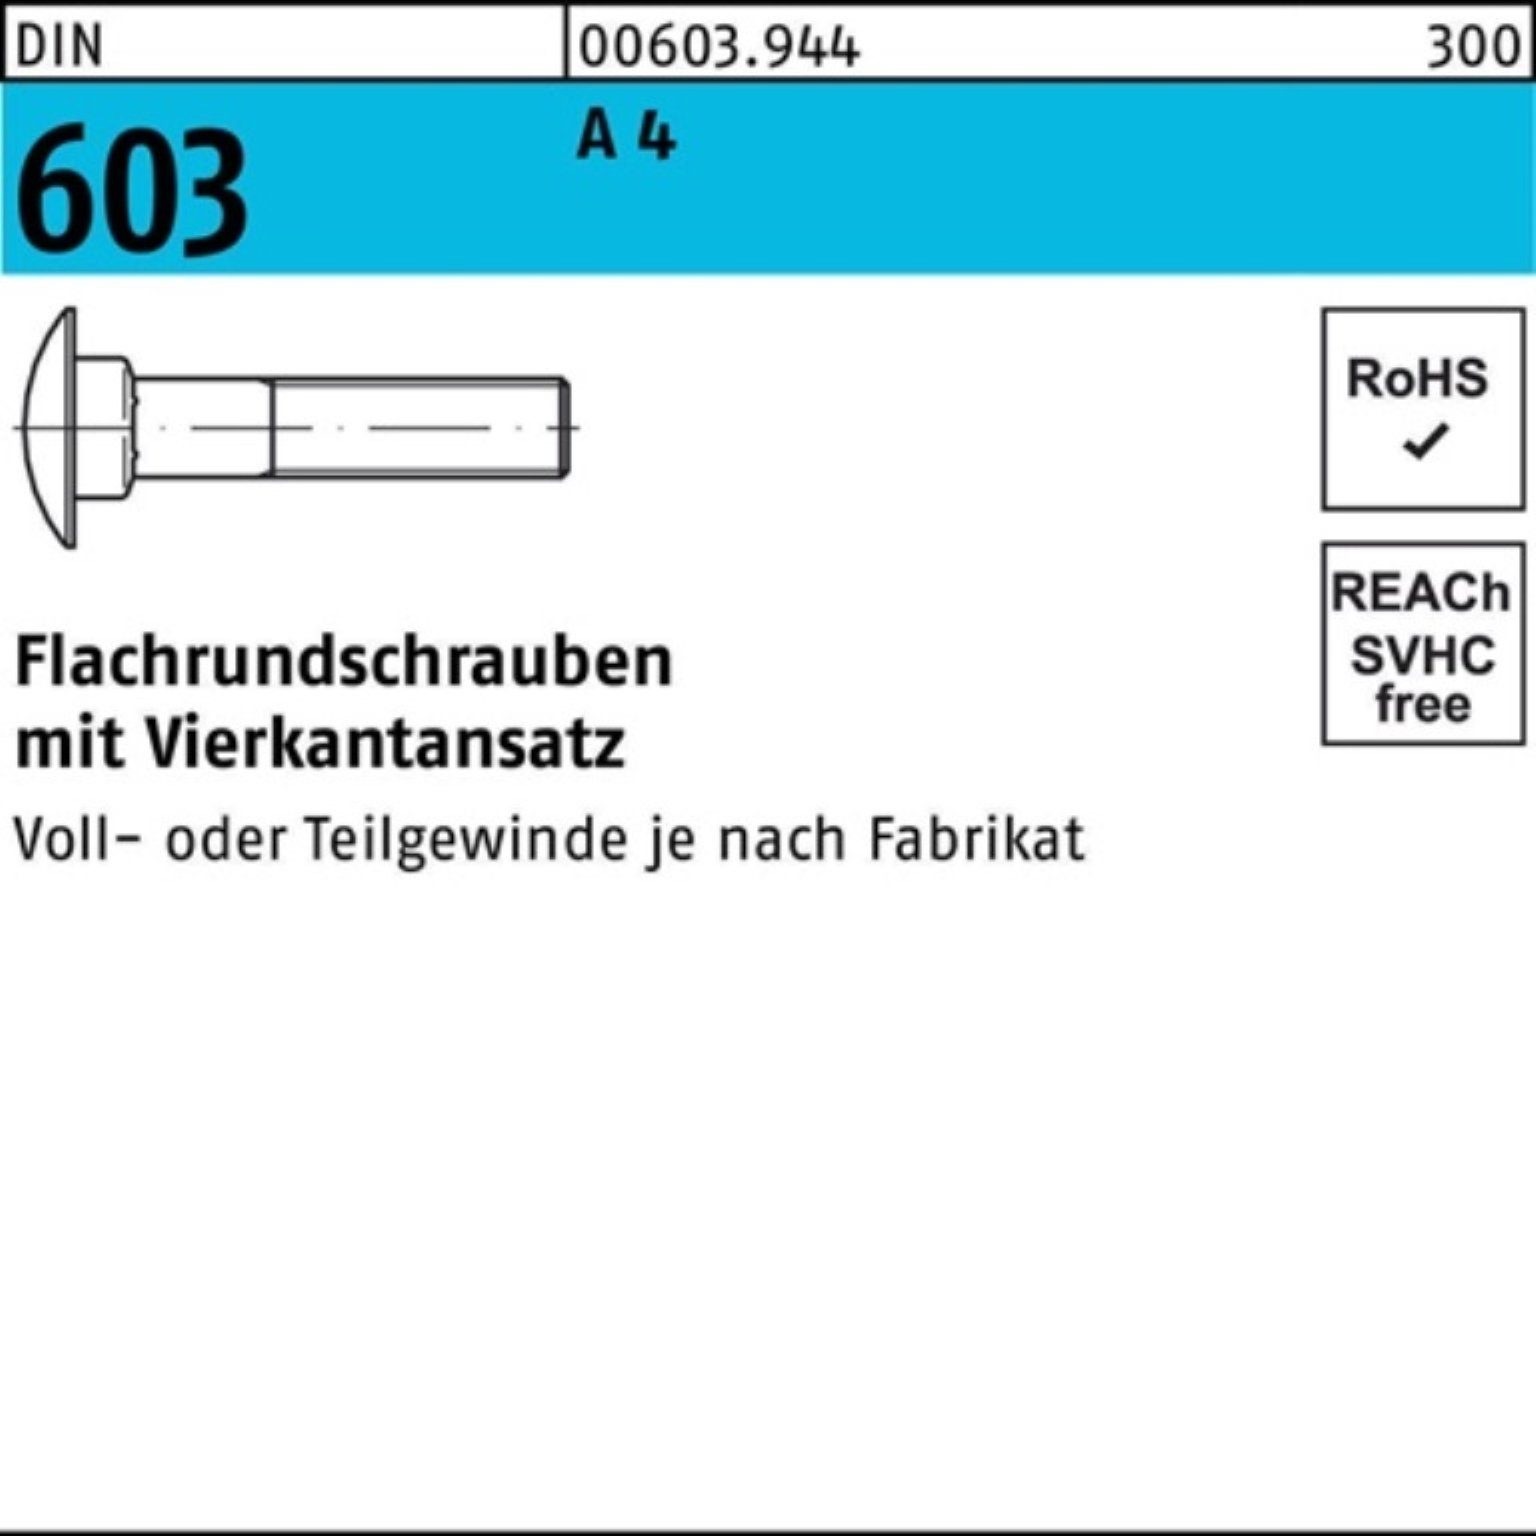 Reyher Schraube 100er Pack Flachrundschraube DIN 603 Vierkantansatz M12x 130 A 4 1 St